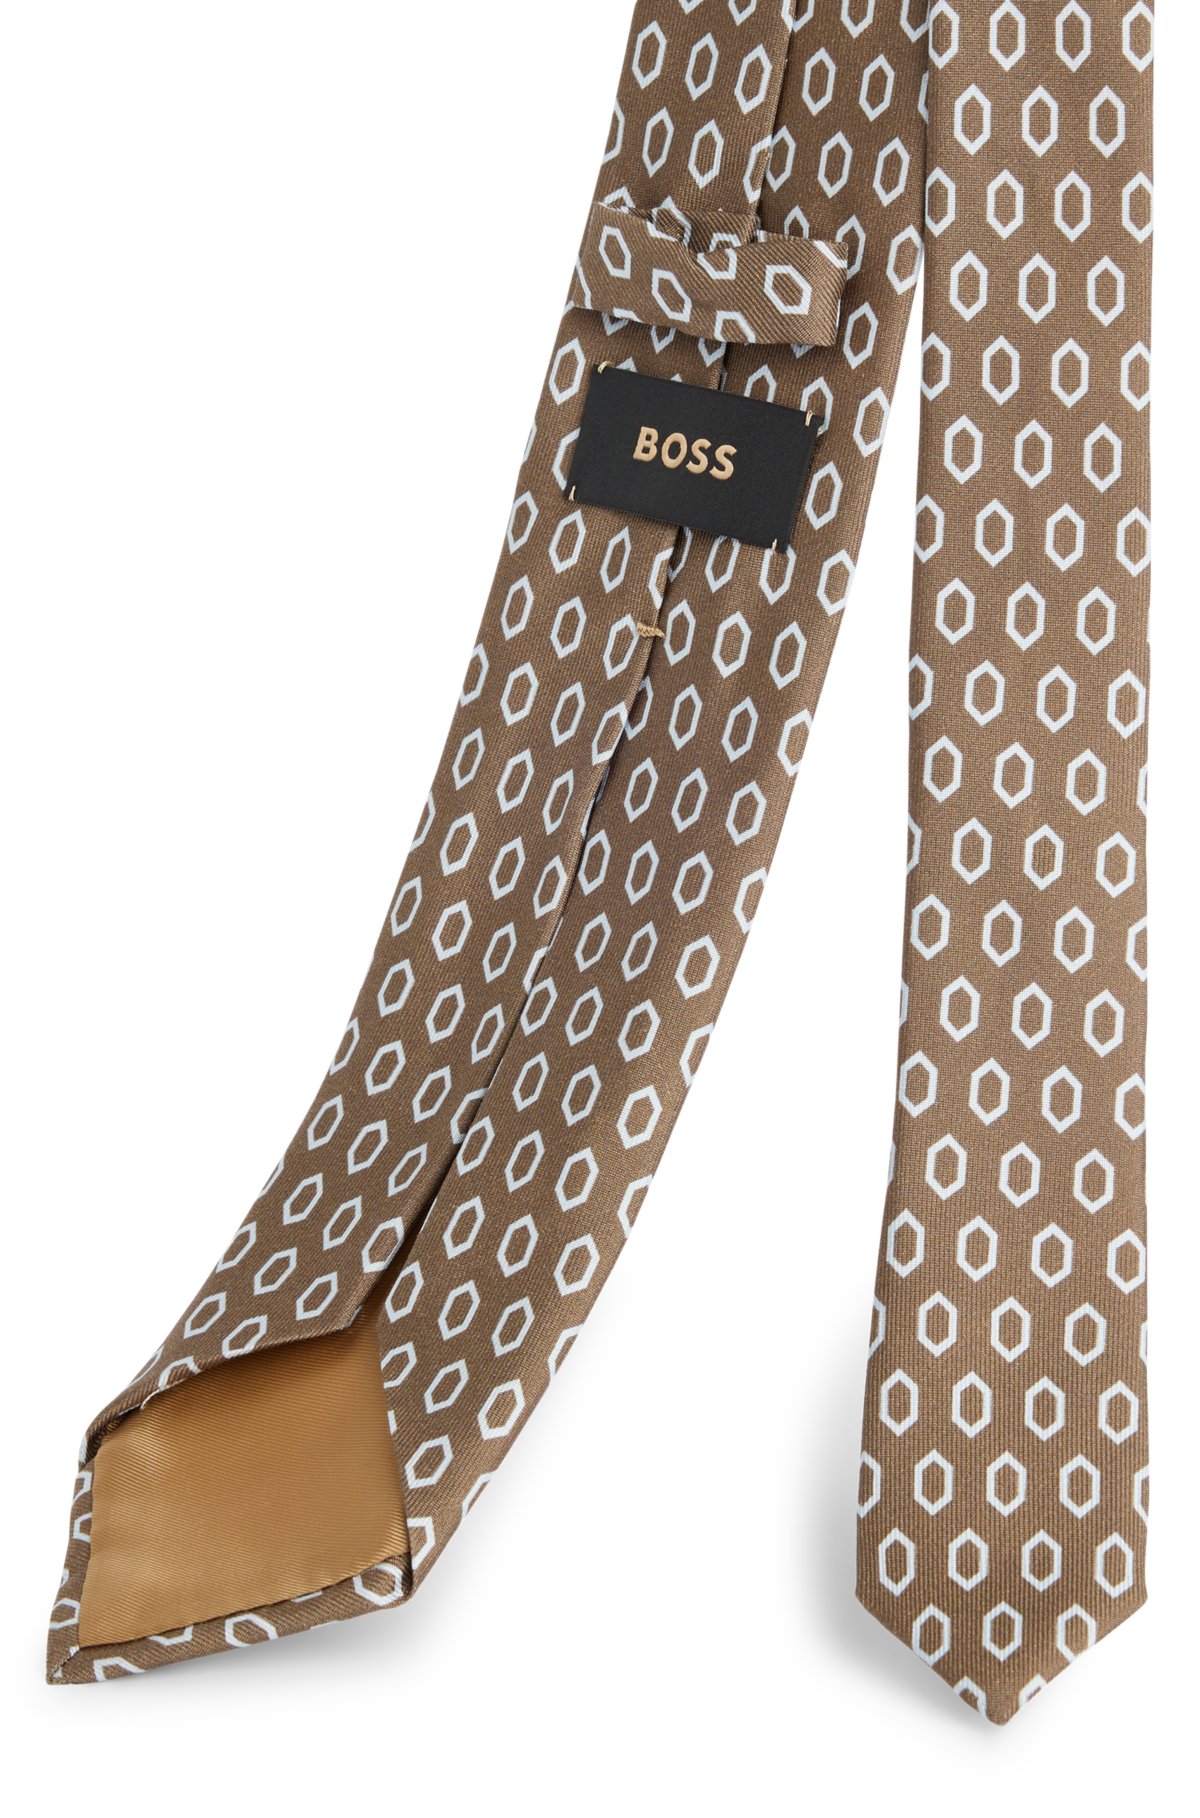 Silk tie with digital print, Beige